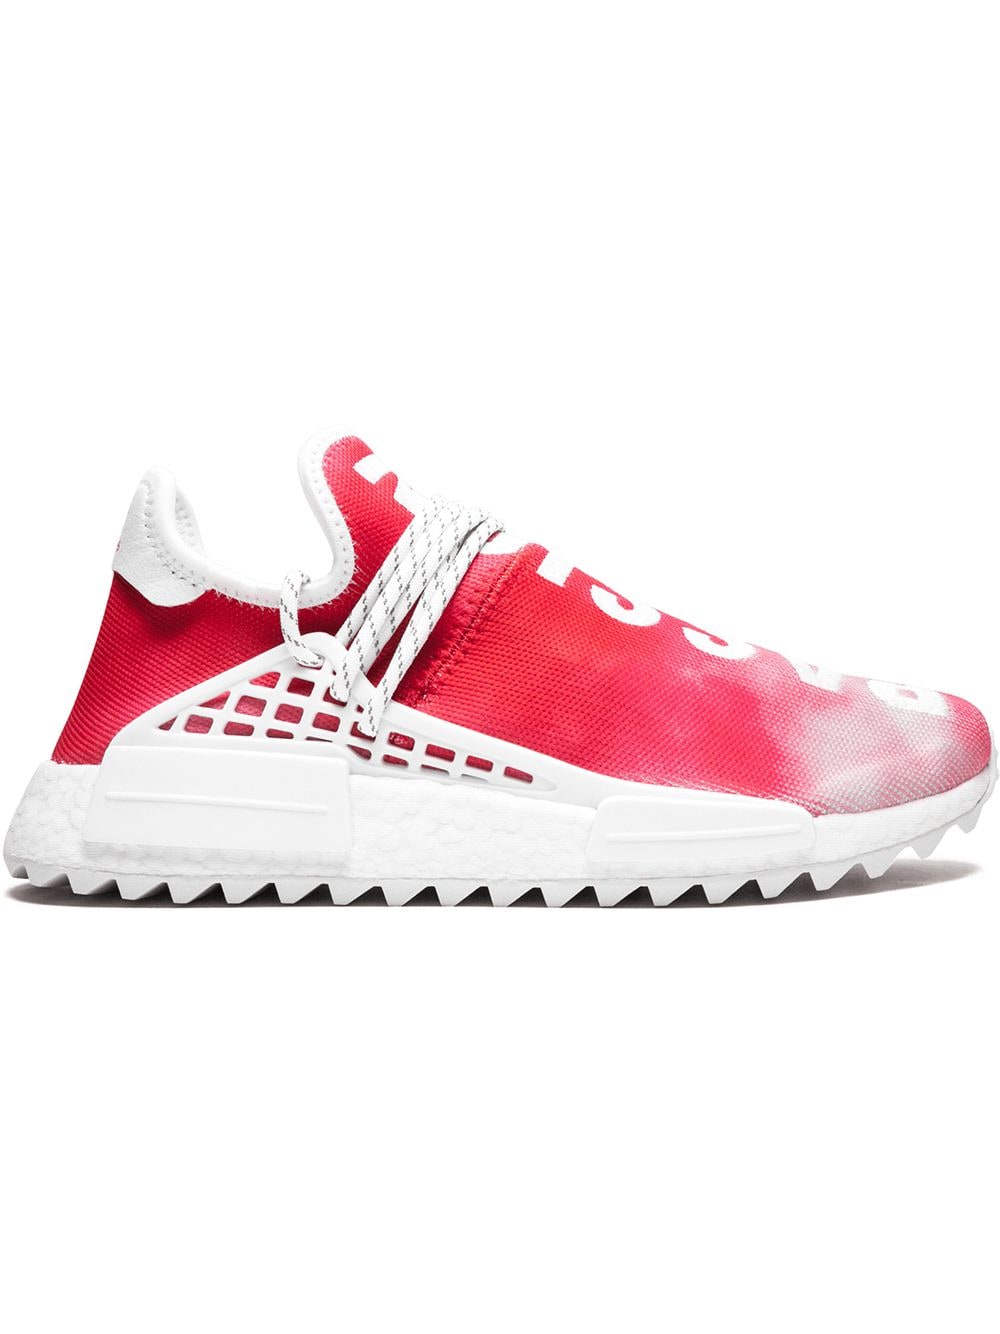 adidas x Pharrel Williams Hu Holi NMD MC "Passion" sneakers - Red von adidas